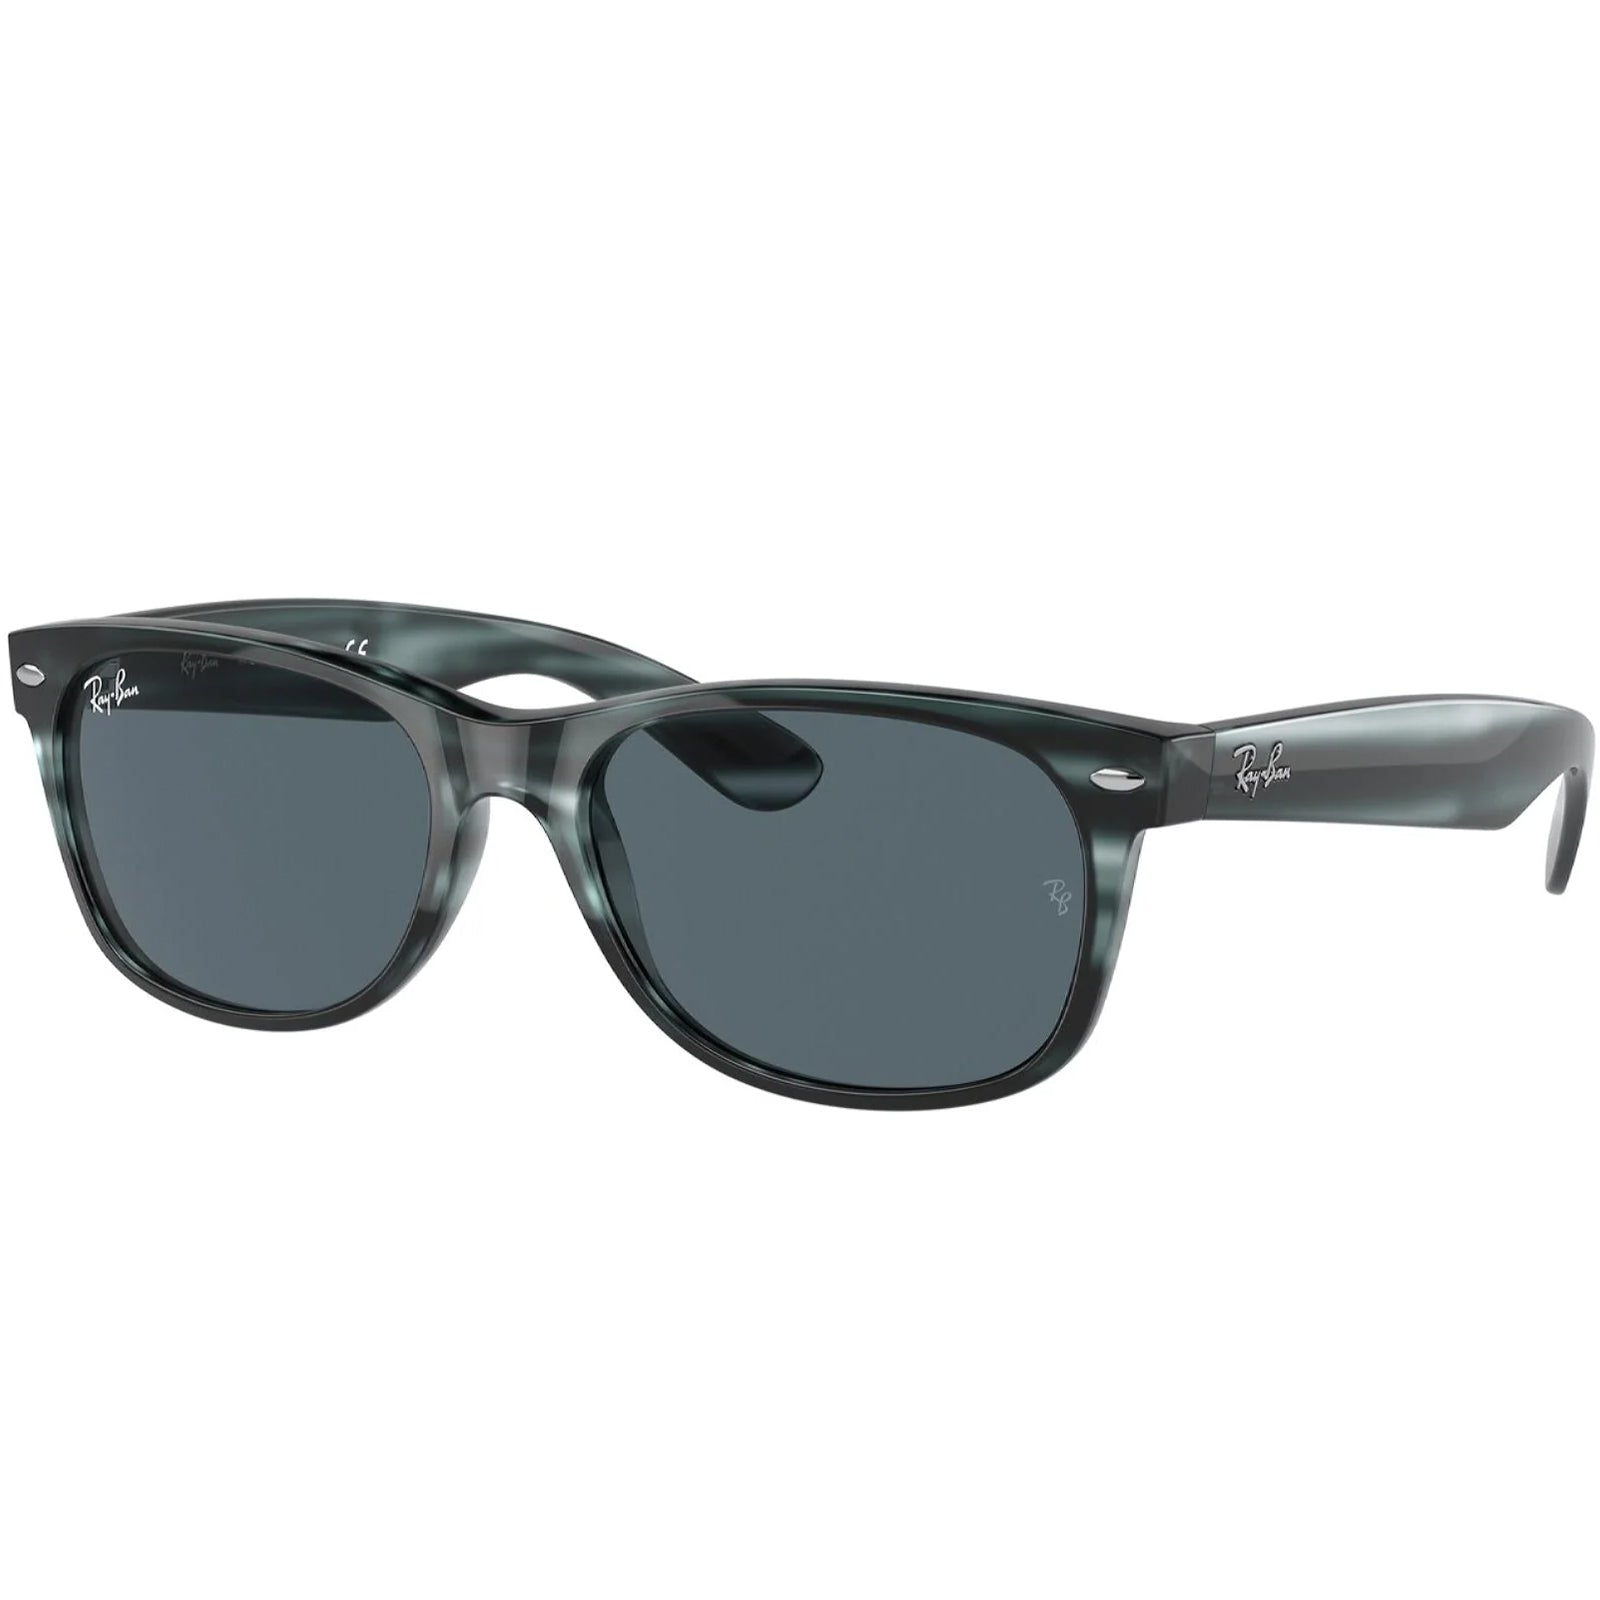 Ray-Ban New Wayfarer Color Mix Adult Lifestyle Sunglasses-0RB2132F